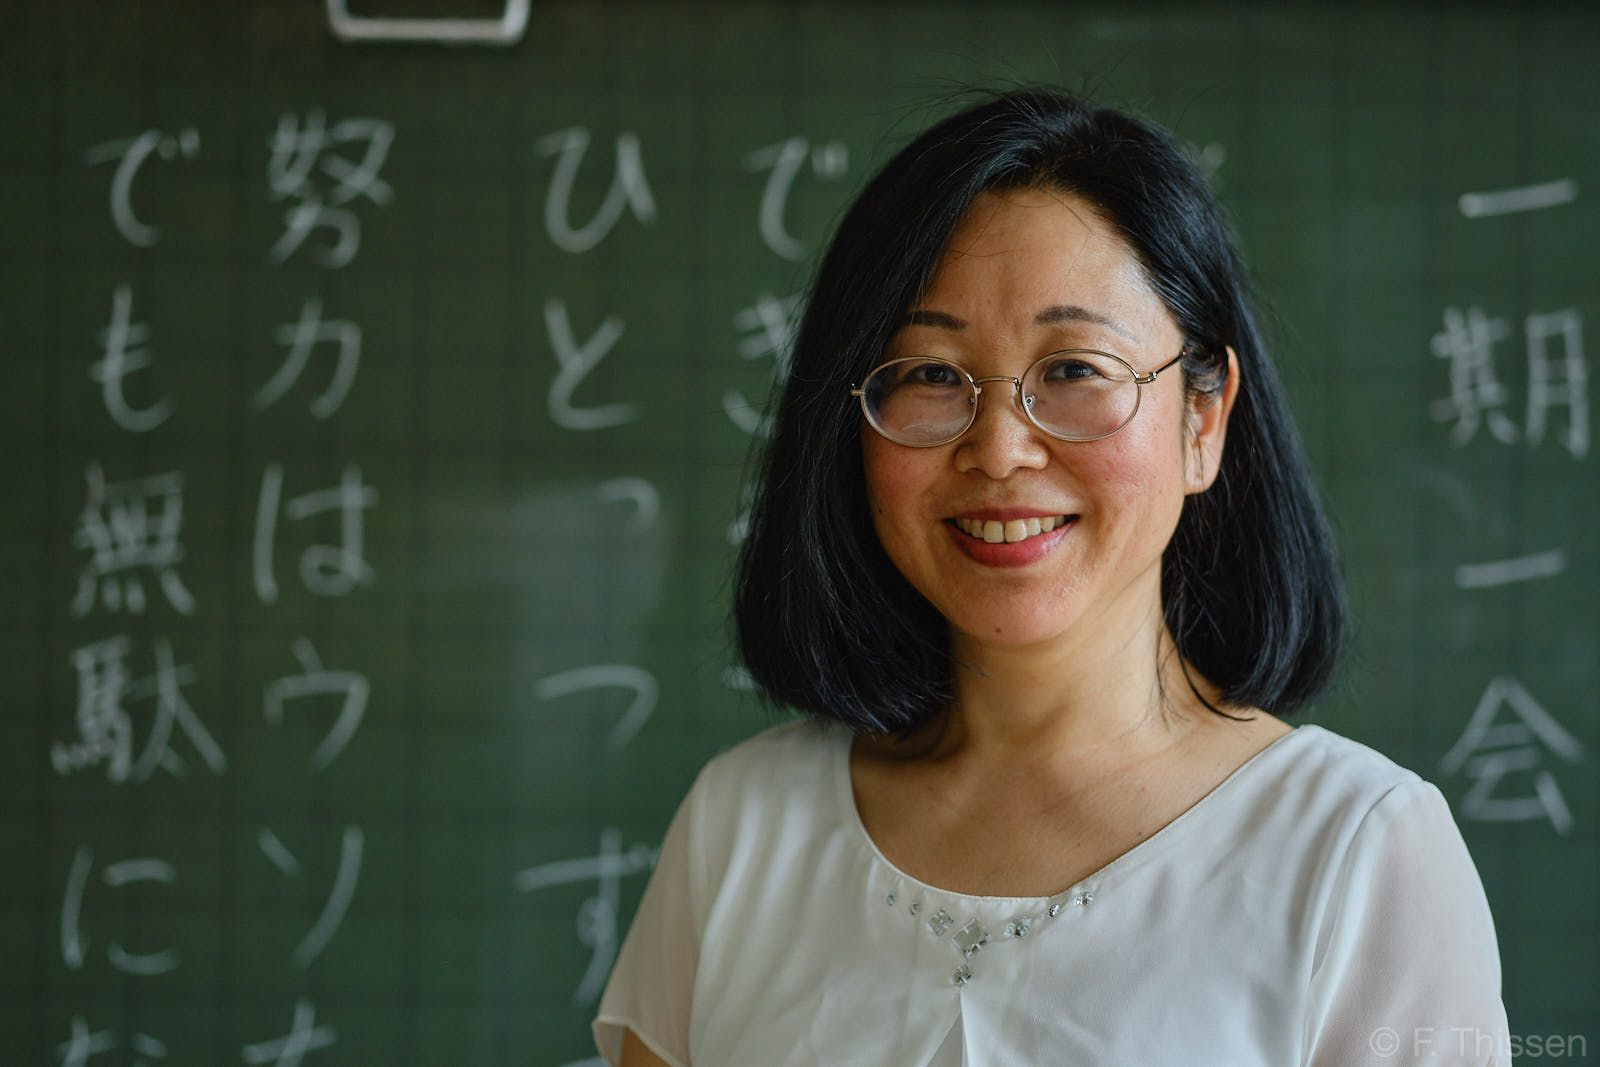 Migiwa Inoue-Gramlich